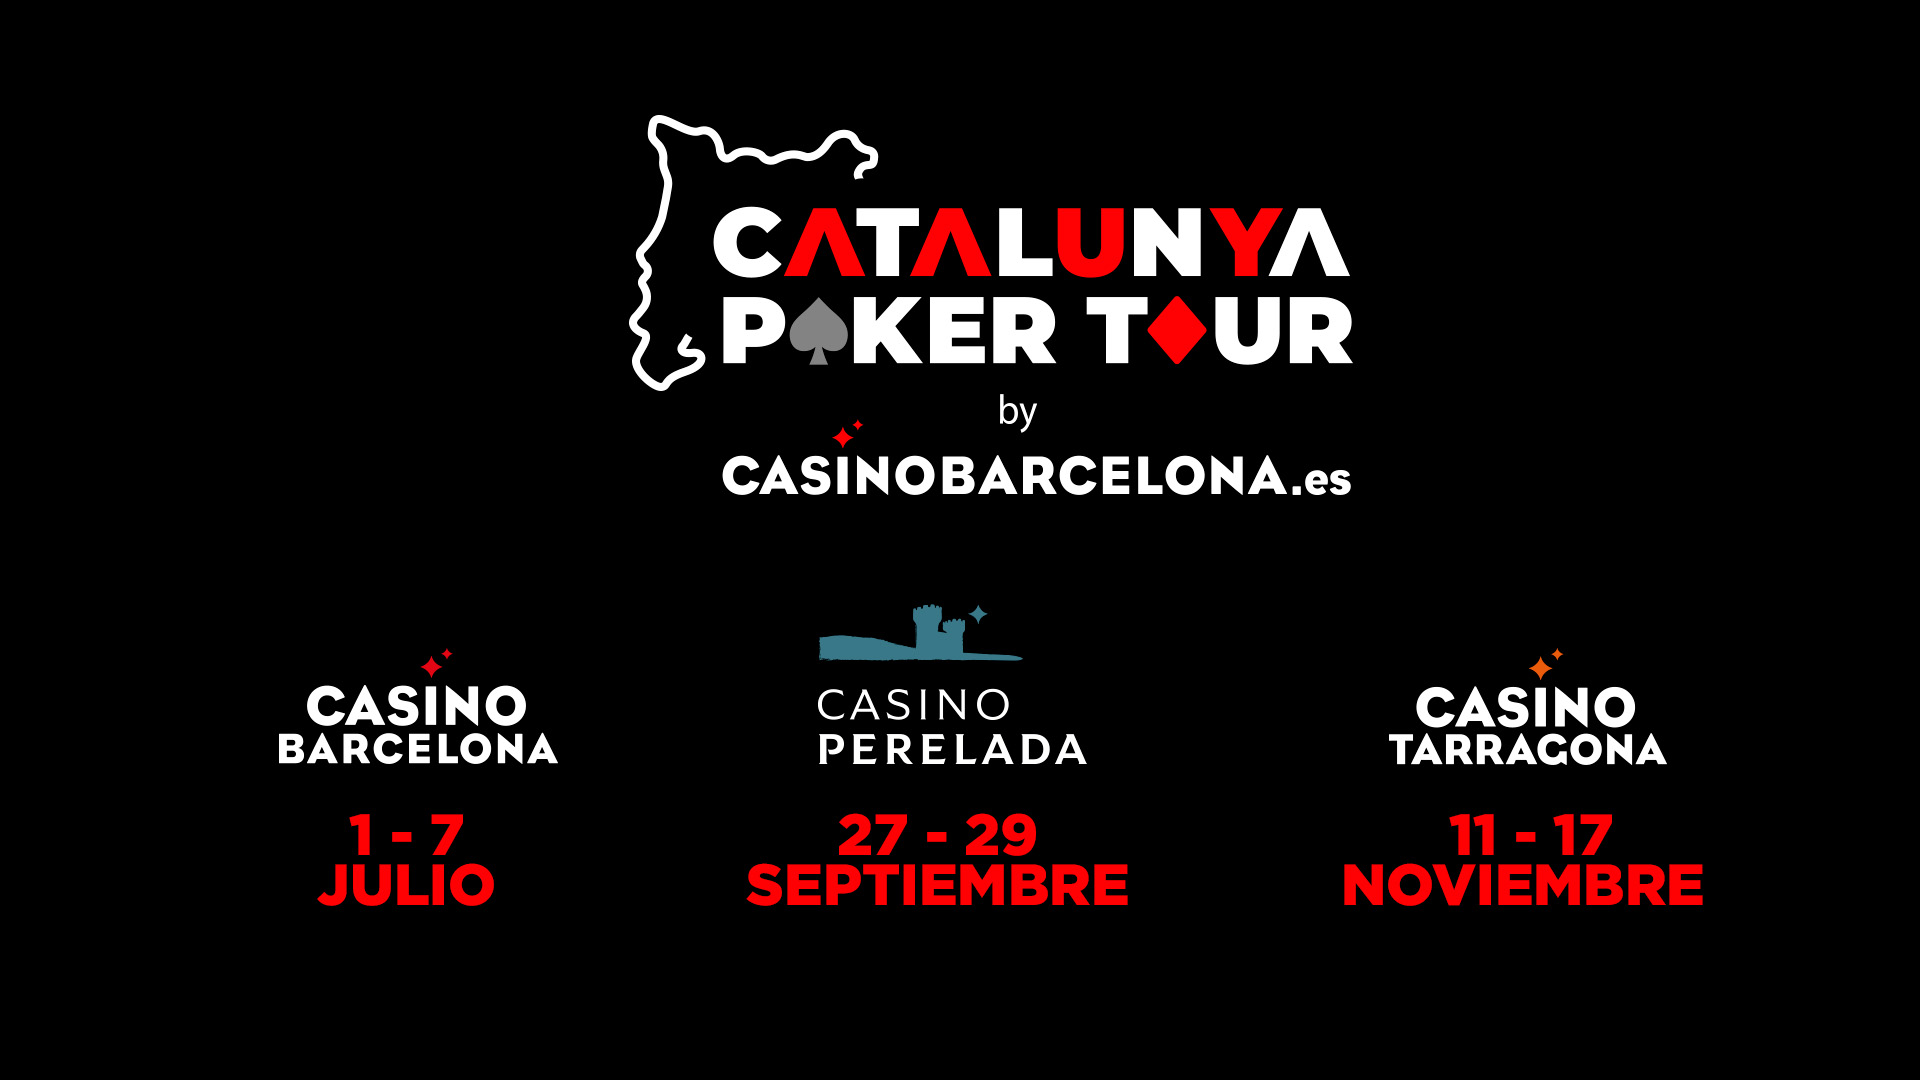 Catalunya Poker Tour by CasinoBarcelona.es-1